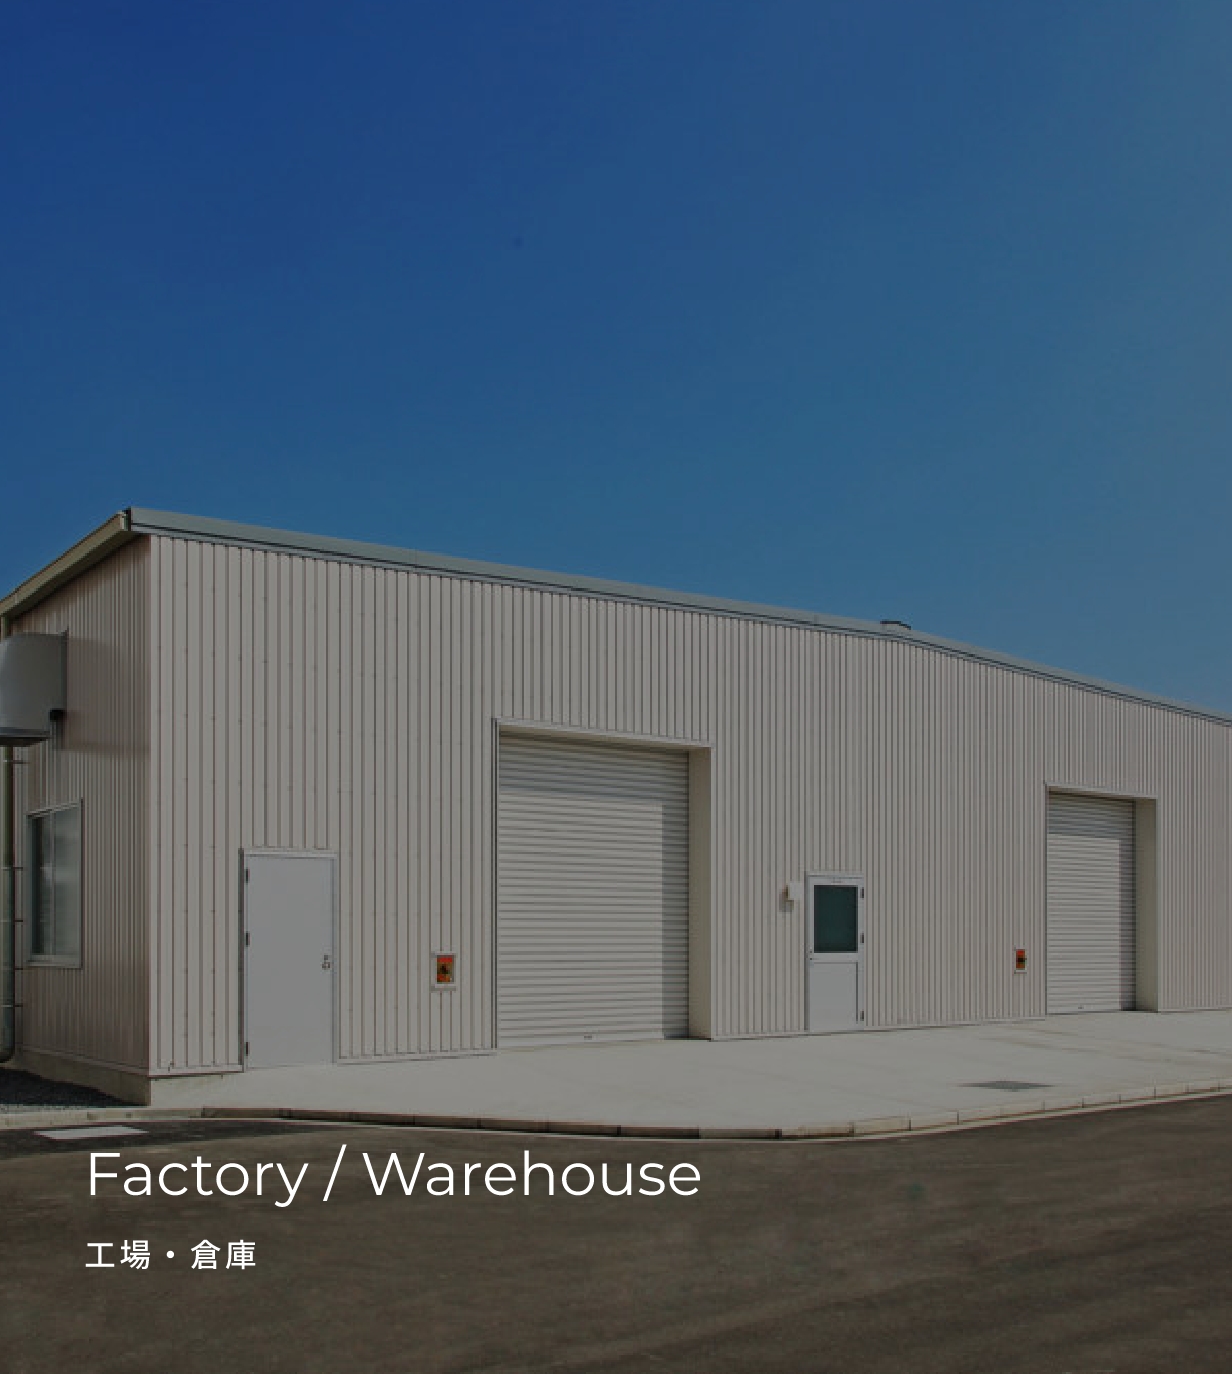 Factory / Warehouse 工場・倉庫